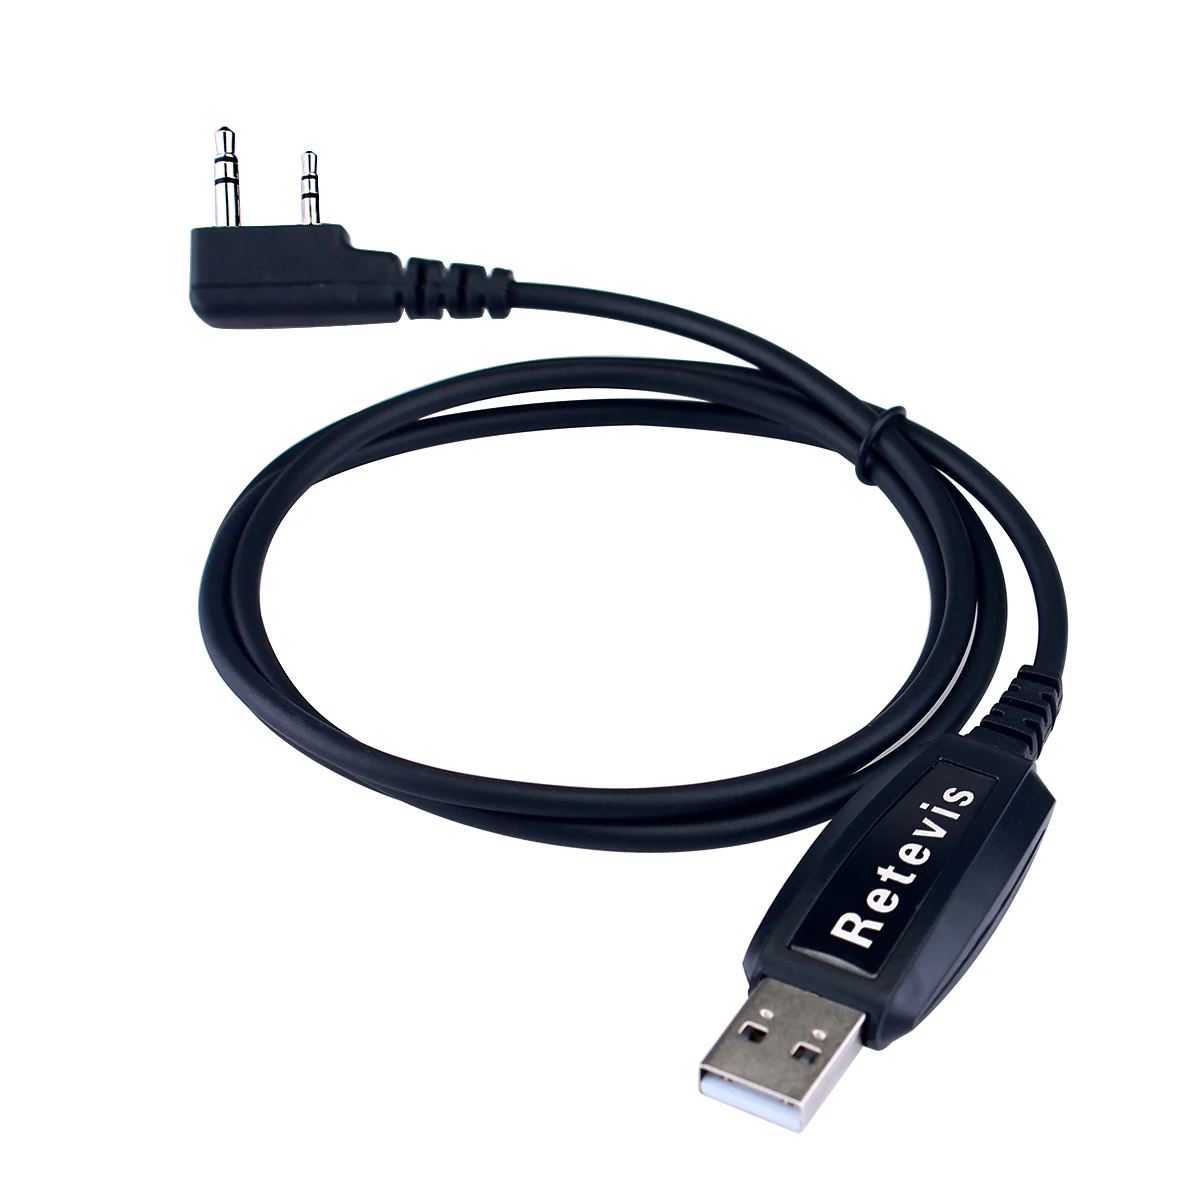 

Retevis Original USB Programming Cable for TYT DMR MD-380/Retevis RT3 two way Radio walkie talkie(Black)